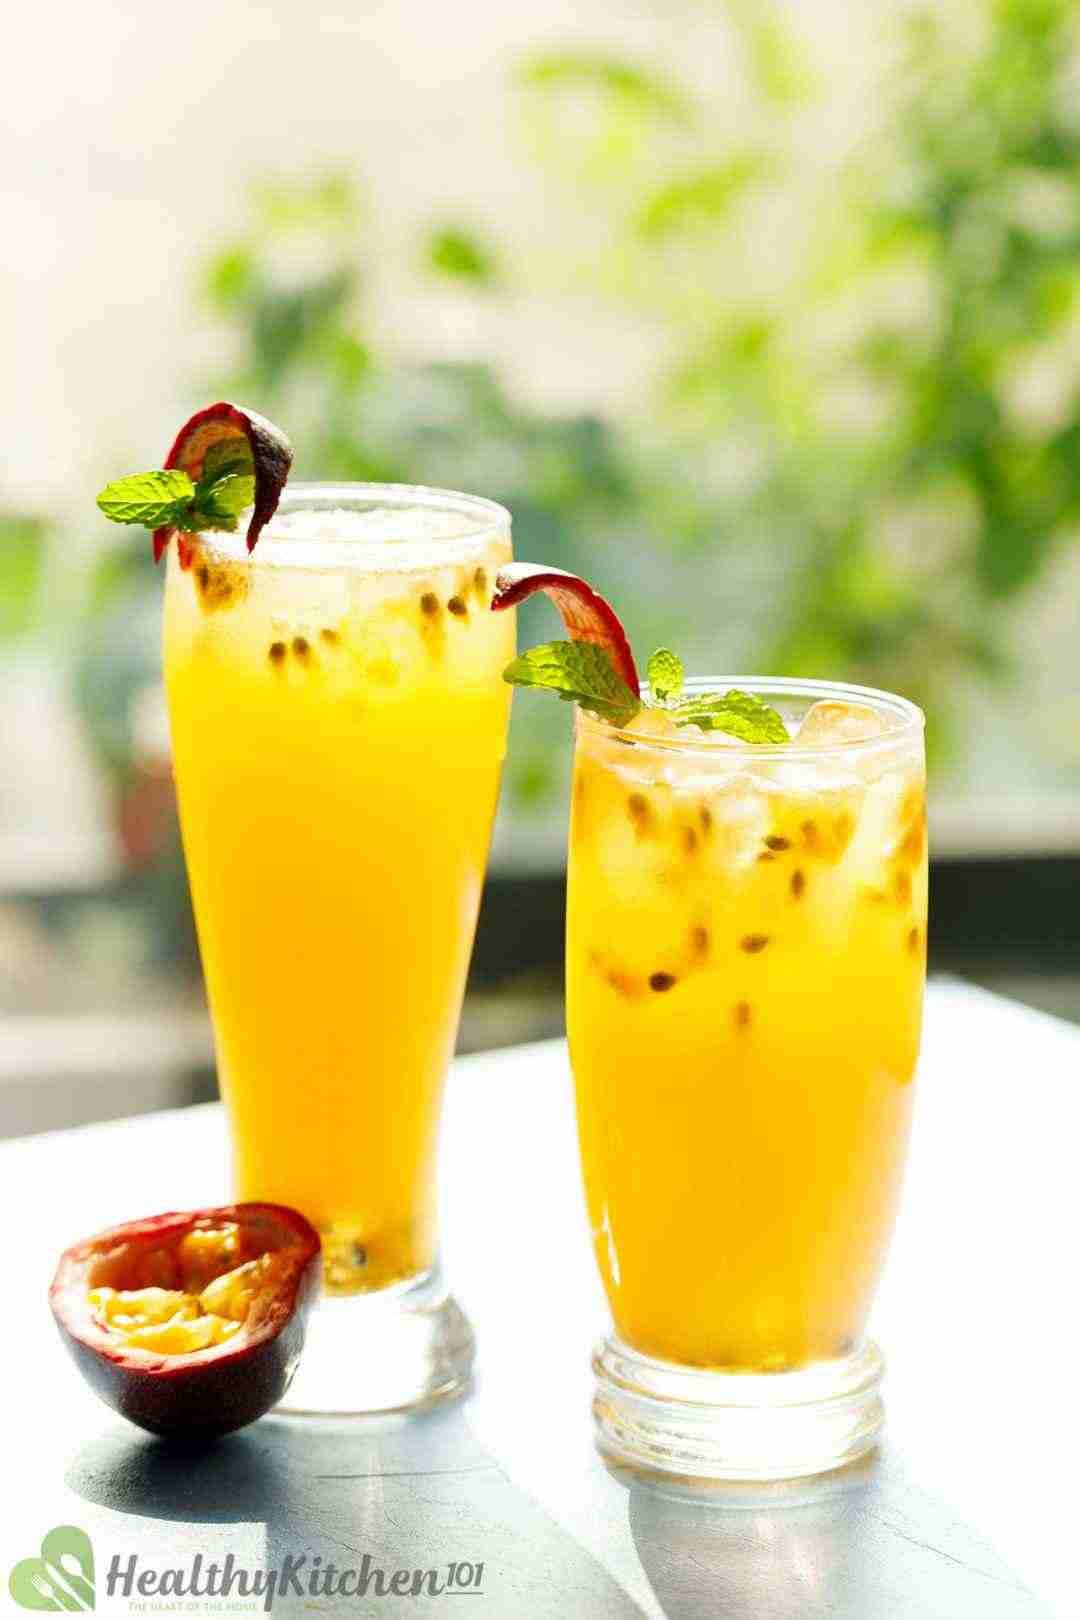 Passion Fruit Juice Recipe - A Sweet, Tart, Refreshing Summer Beverage